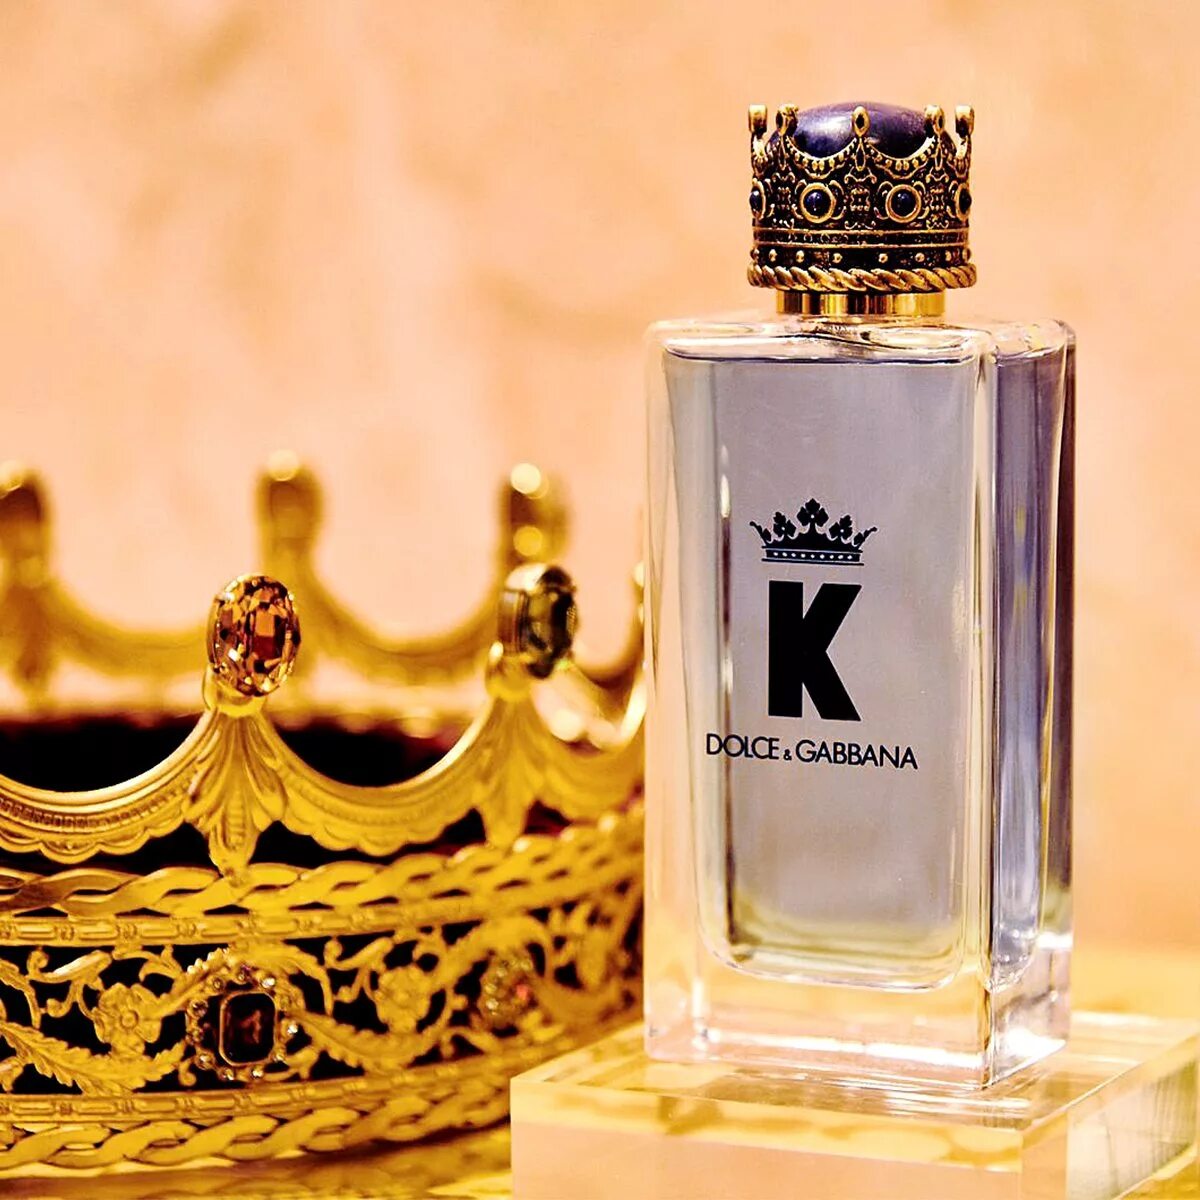 Парфюм дольче габбана корона. Dolce Gabbana King 100ml. Dolce Gabbana King Parfum. Dolce & Gabbana King Eau de Parfum 100 ml. Dolce Gabbana k King 100ml EDT.